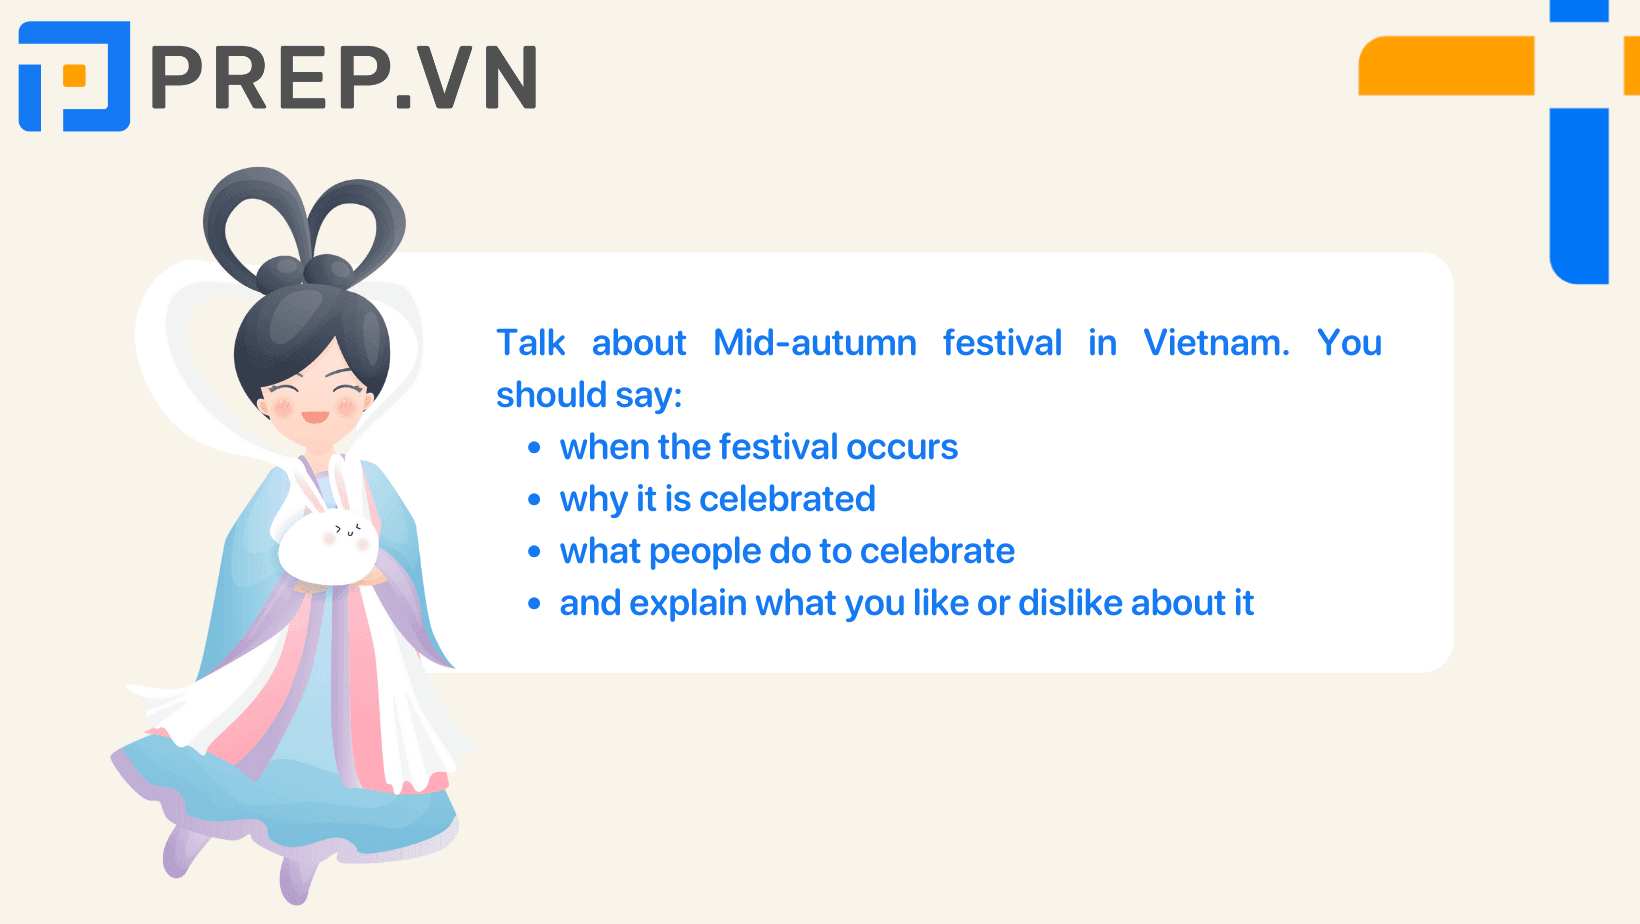 Talk about Mid-autumn festival in Vietnam